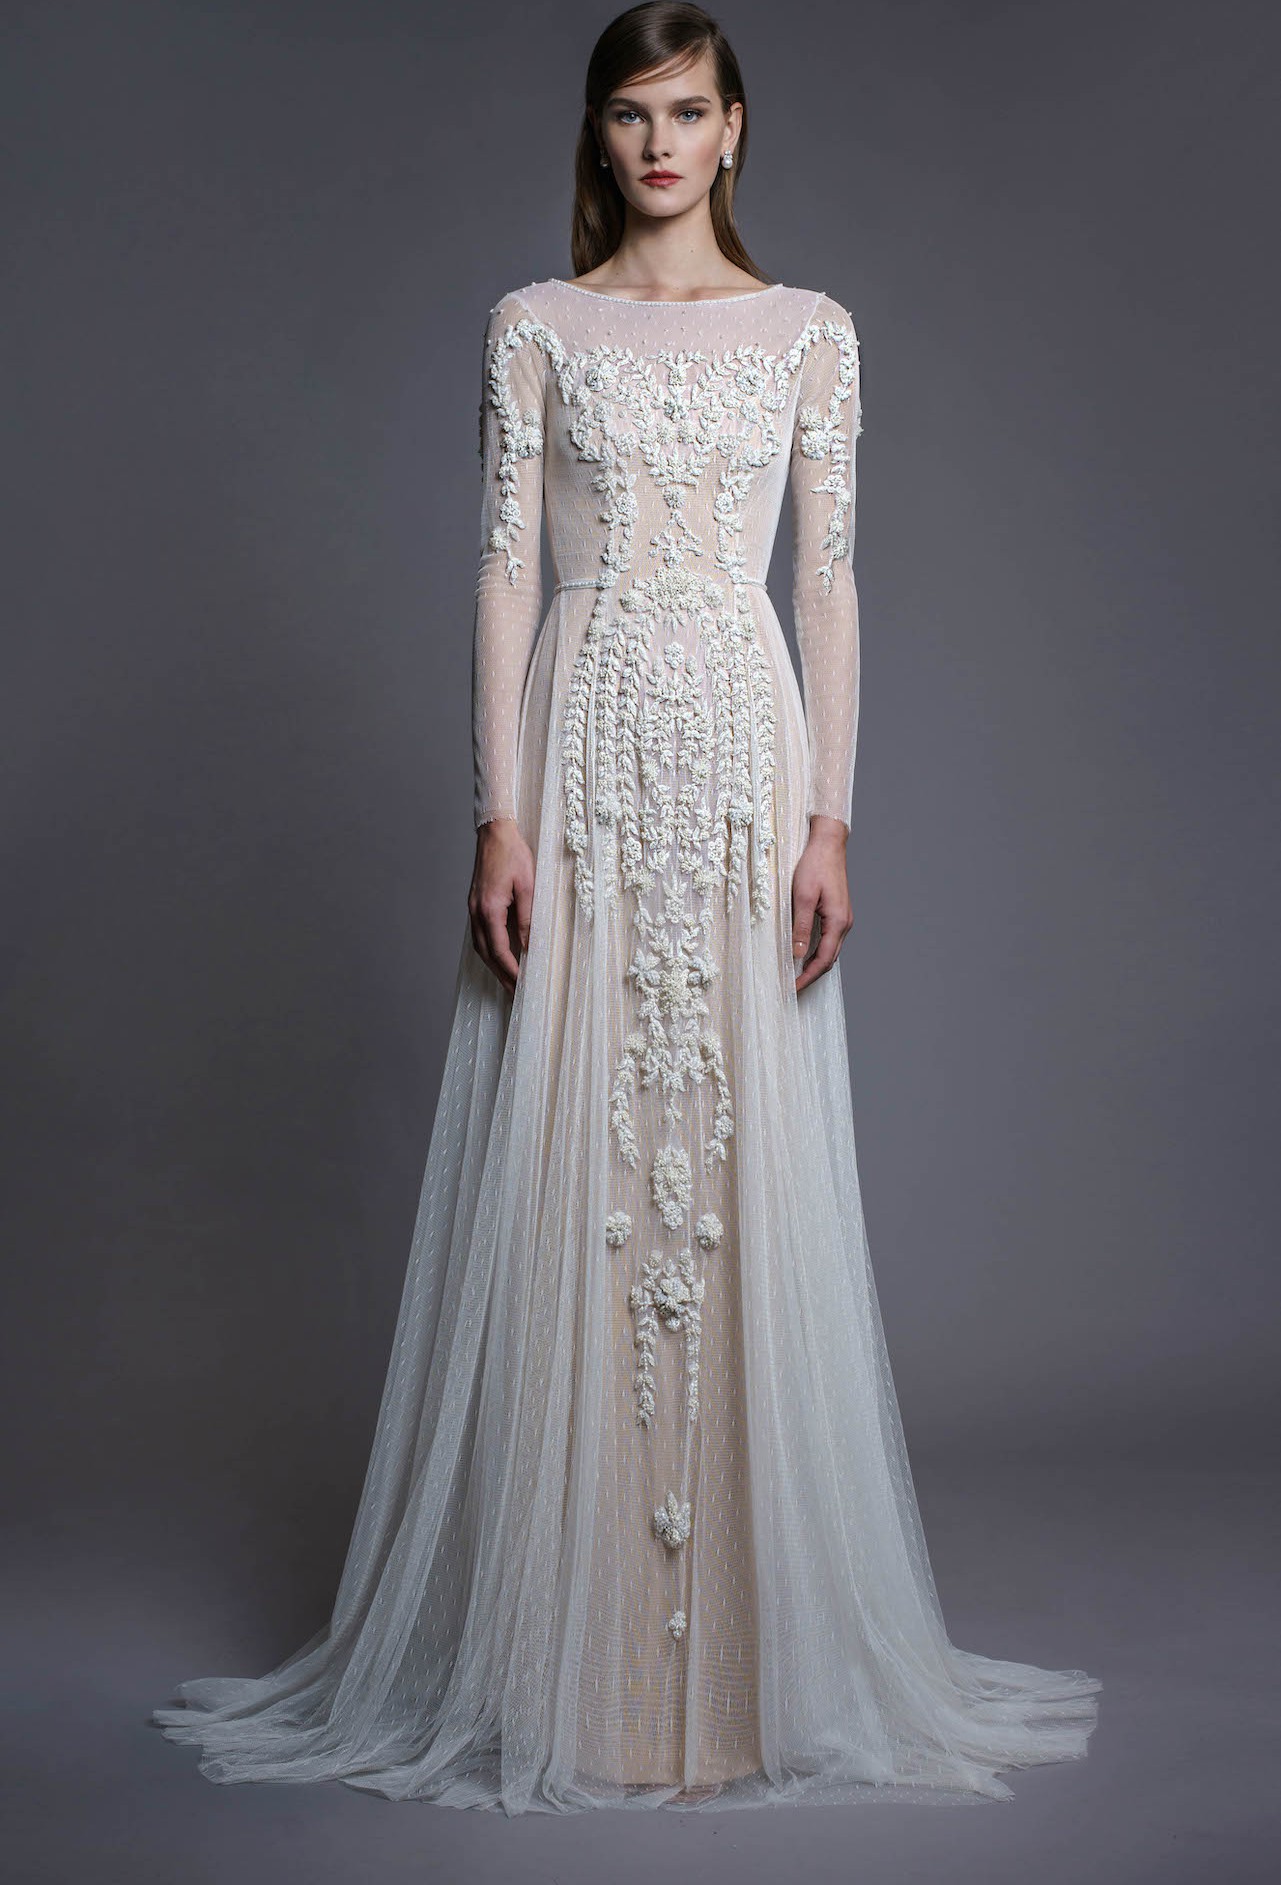 Chana Marelus Lavender Sample Wedding Dress Save 34% - Stillwhite